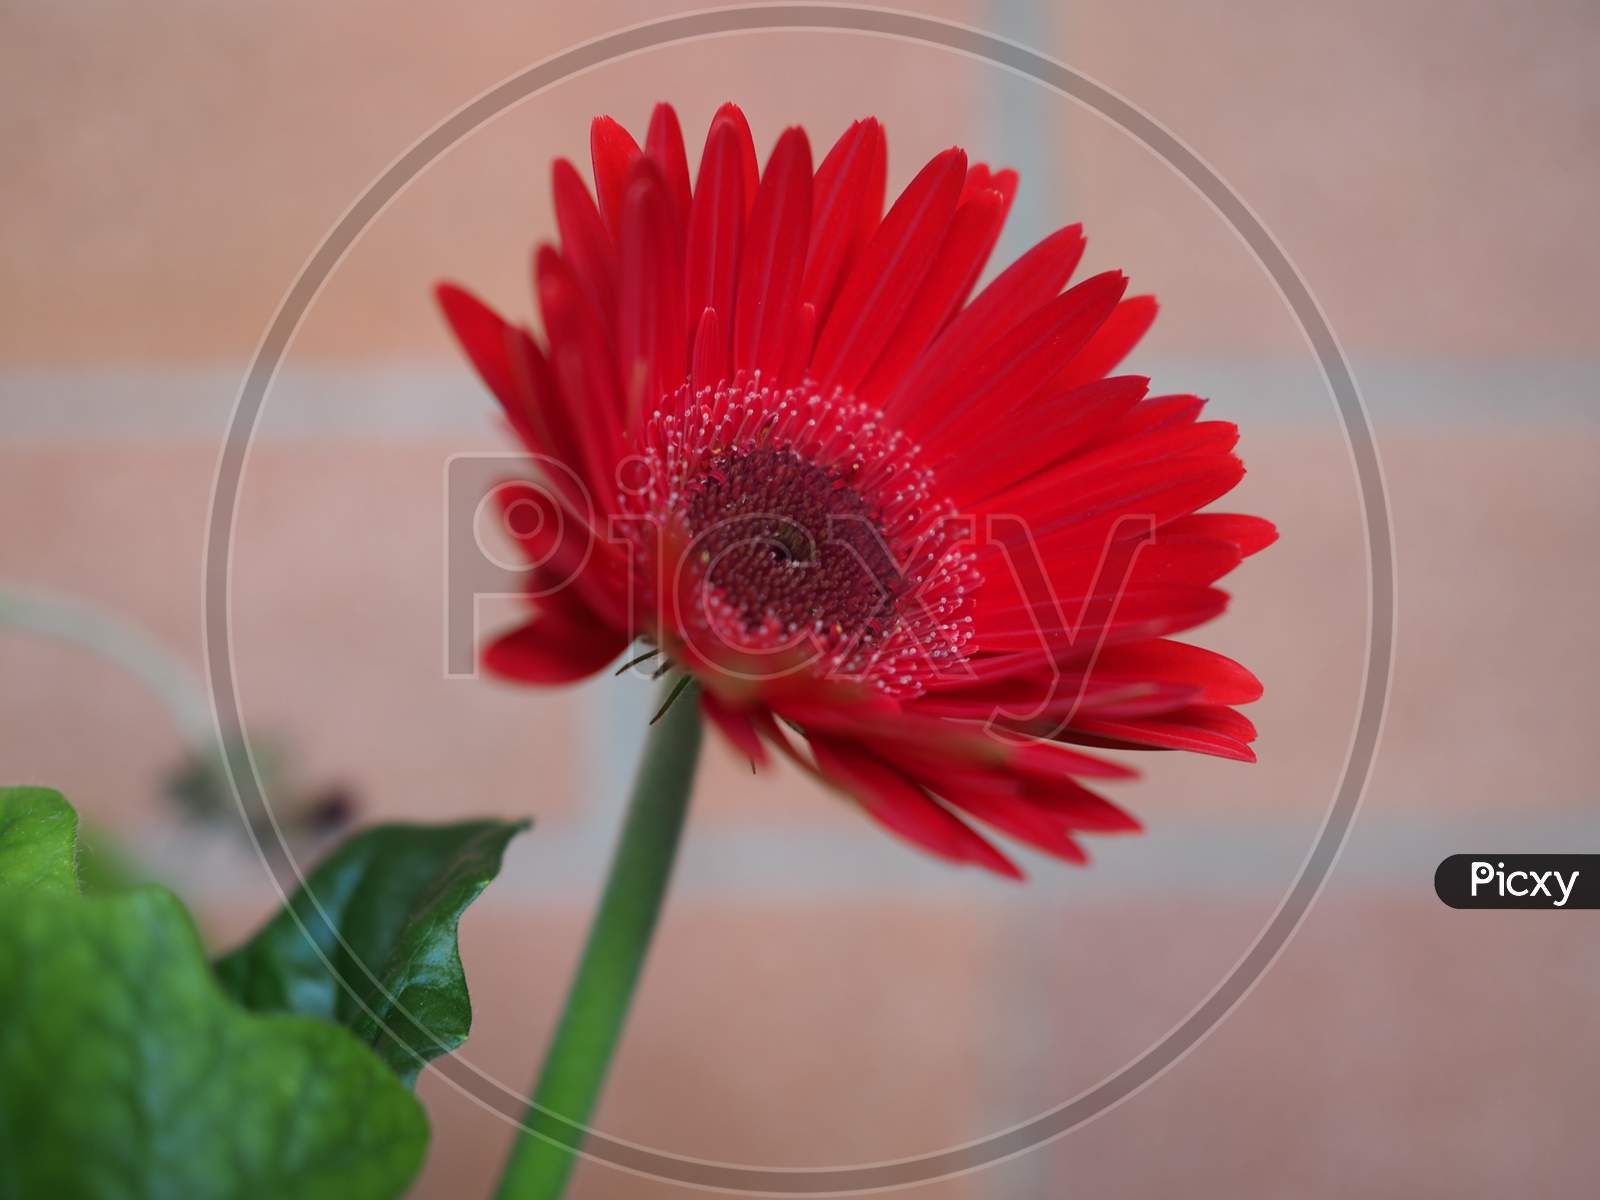 Red Gerbera Daisy Flower